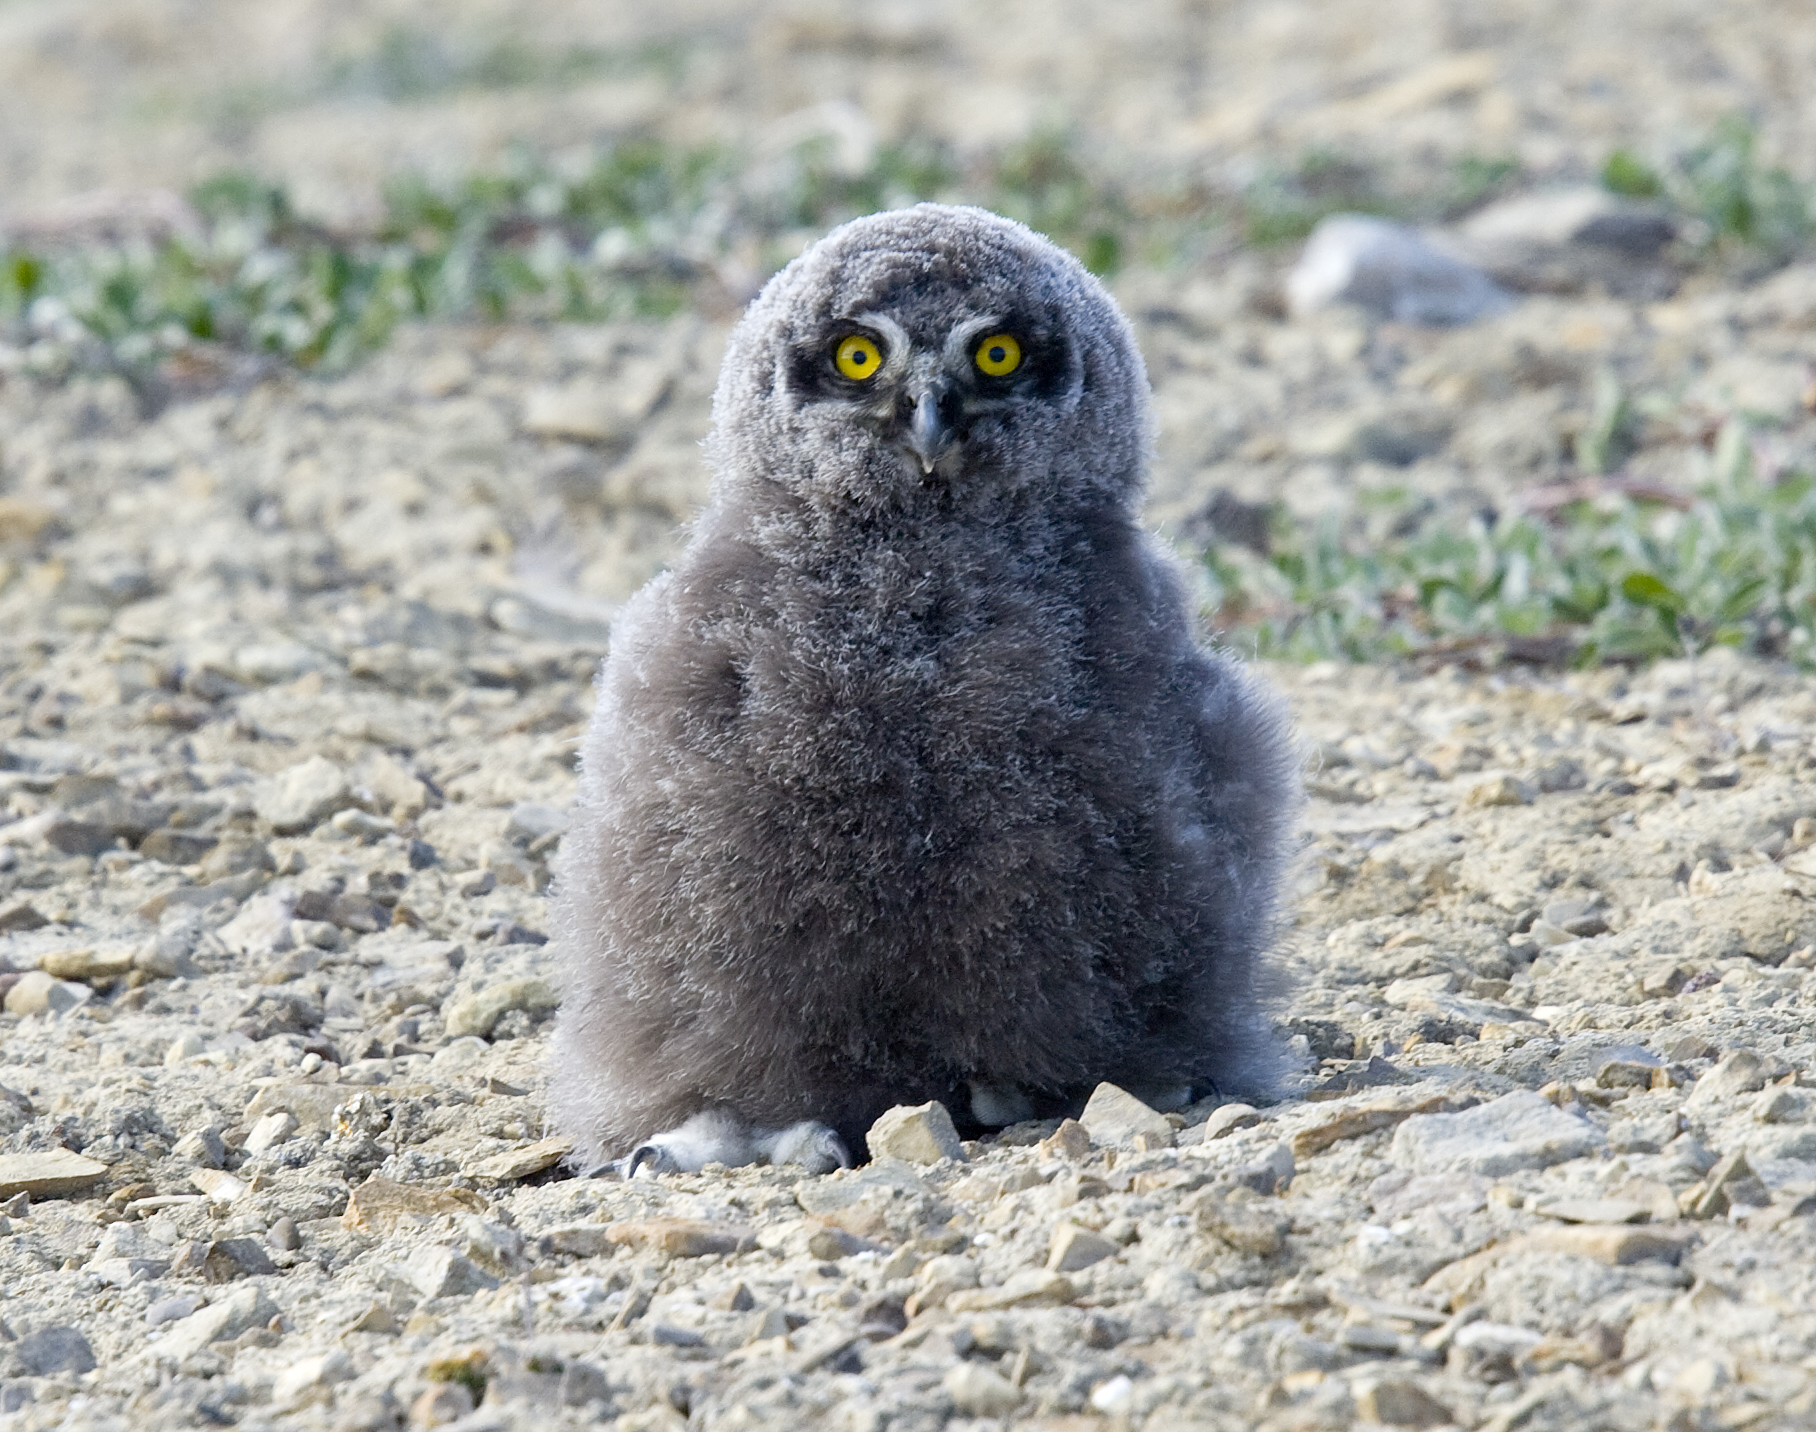 A juvenile snowy owl wandering the tundra. Credit: Nansen Weber